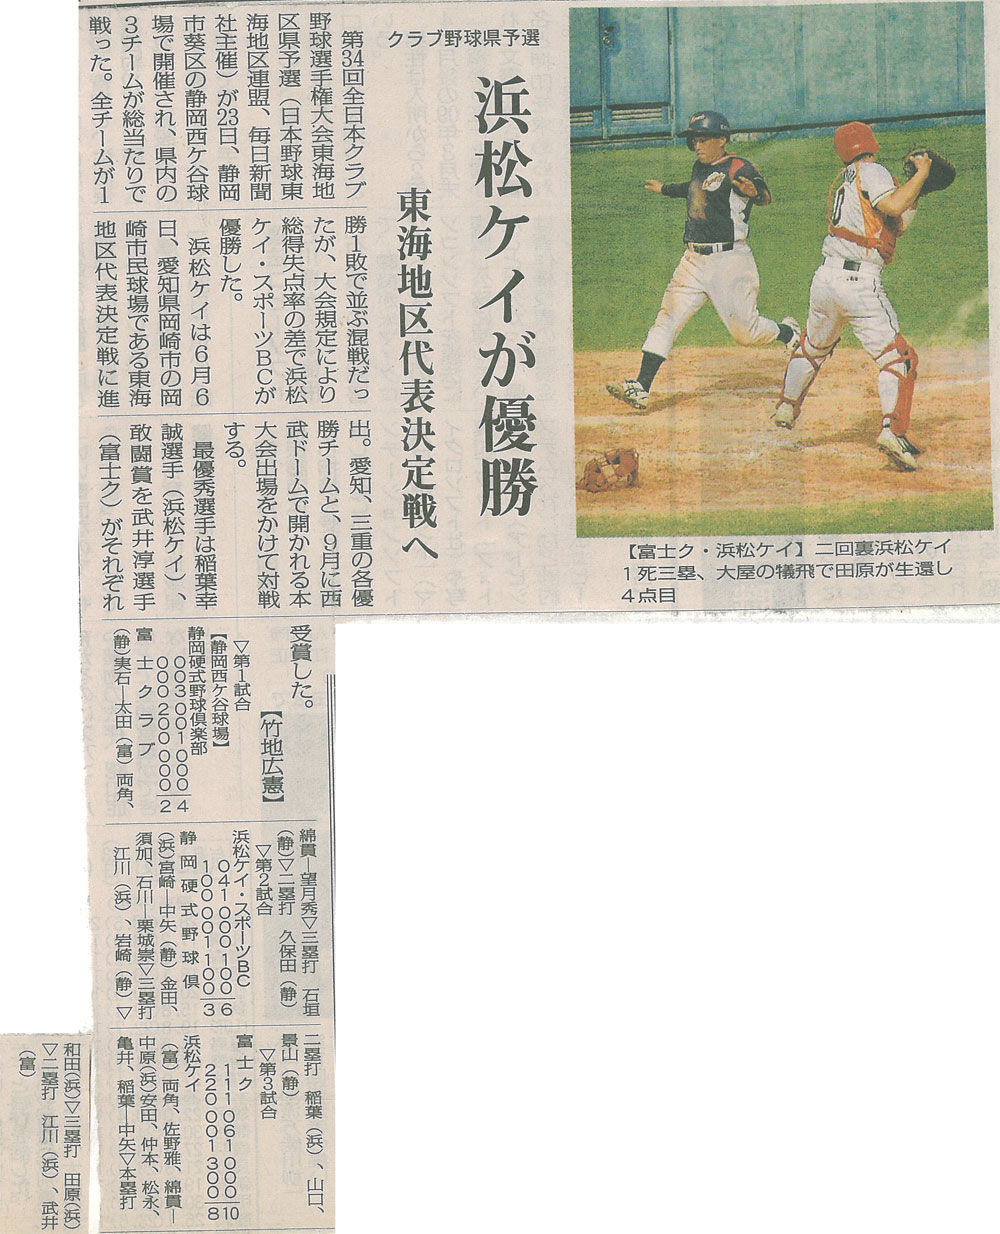 第34回全日本クラブ野球選手権大会